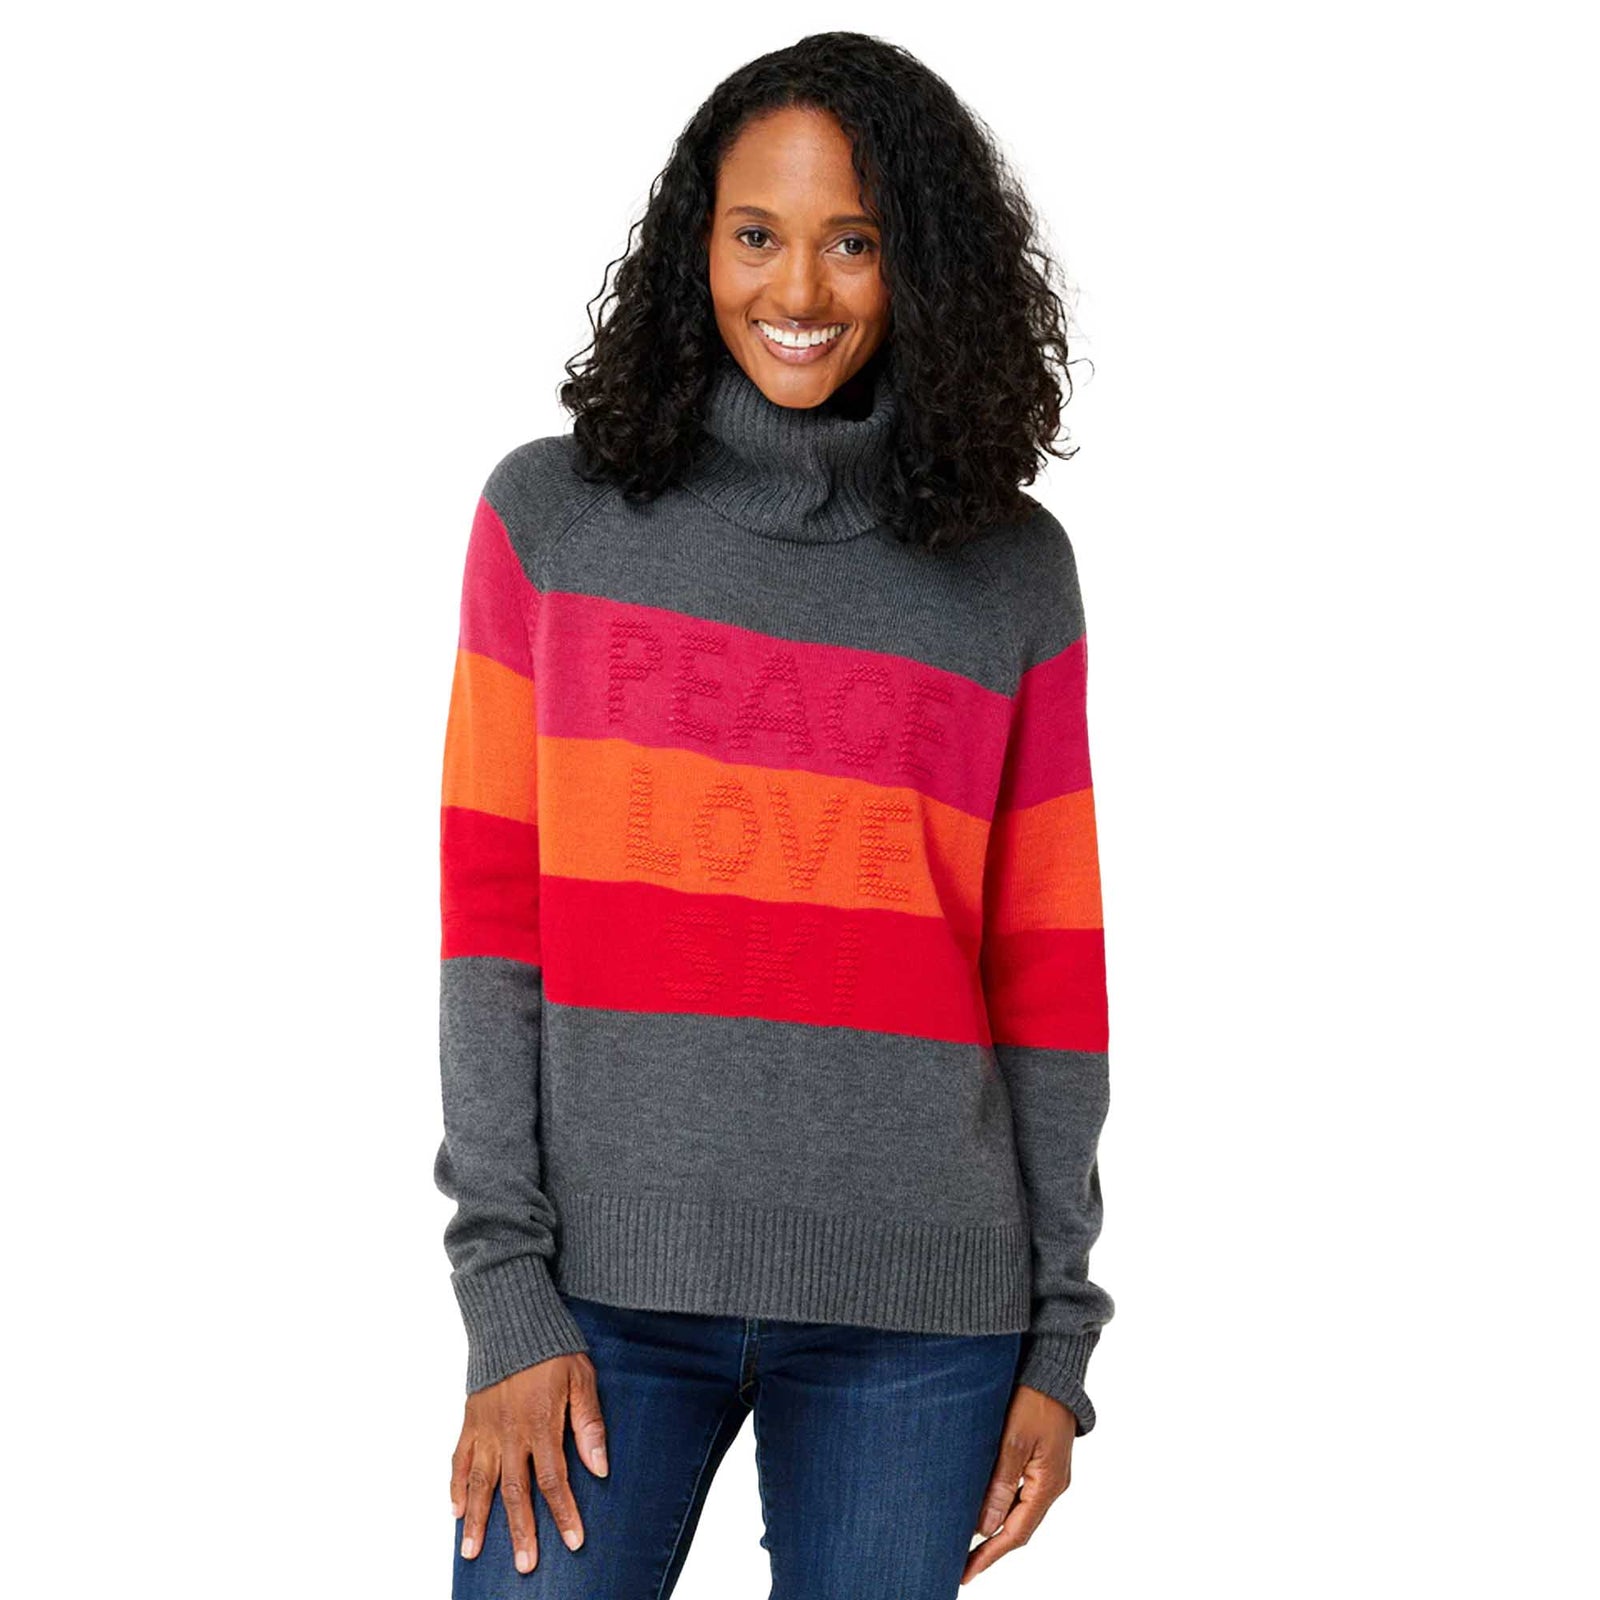 Krimson Klover Women's Joni Turtleneck Sweater 2024 CHARCOAL